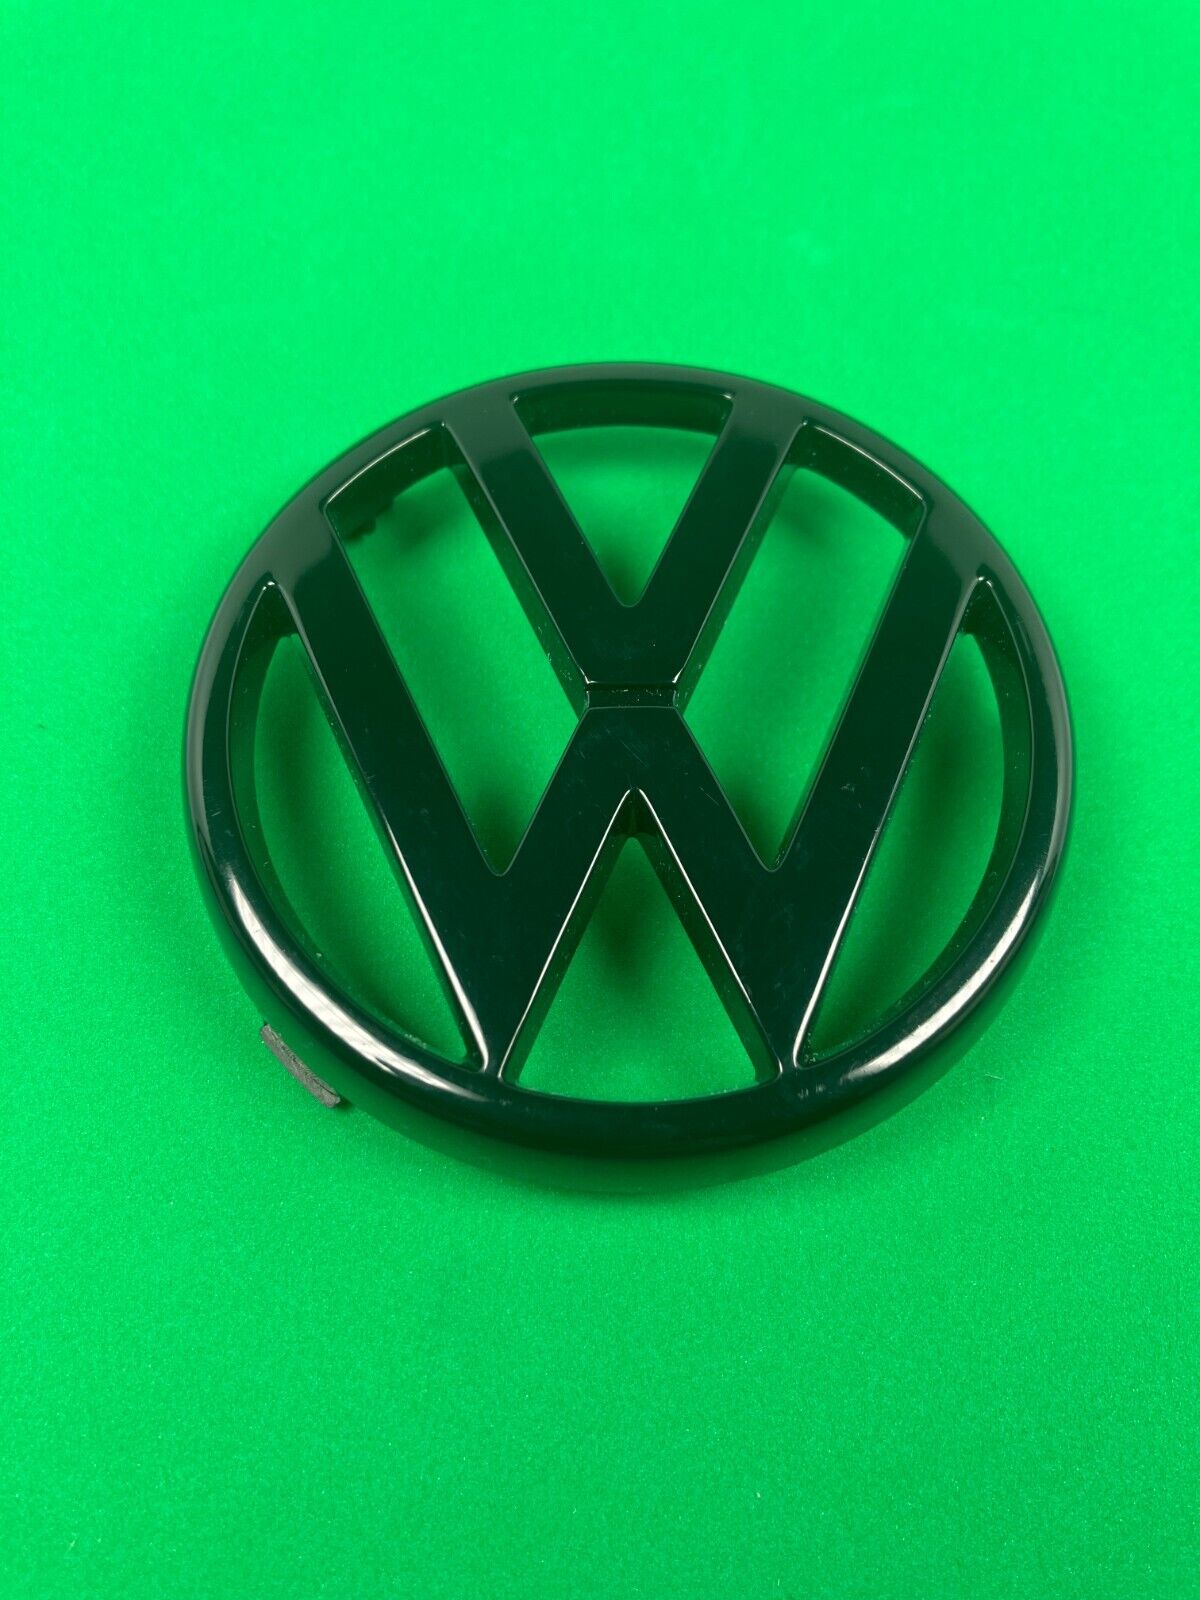 VW Scirocco Front Grille Emblem NOS 1982-1988